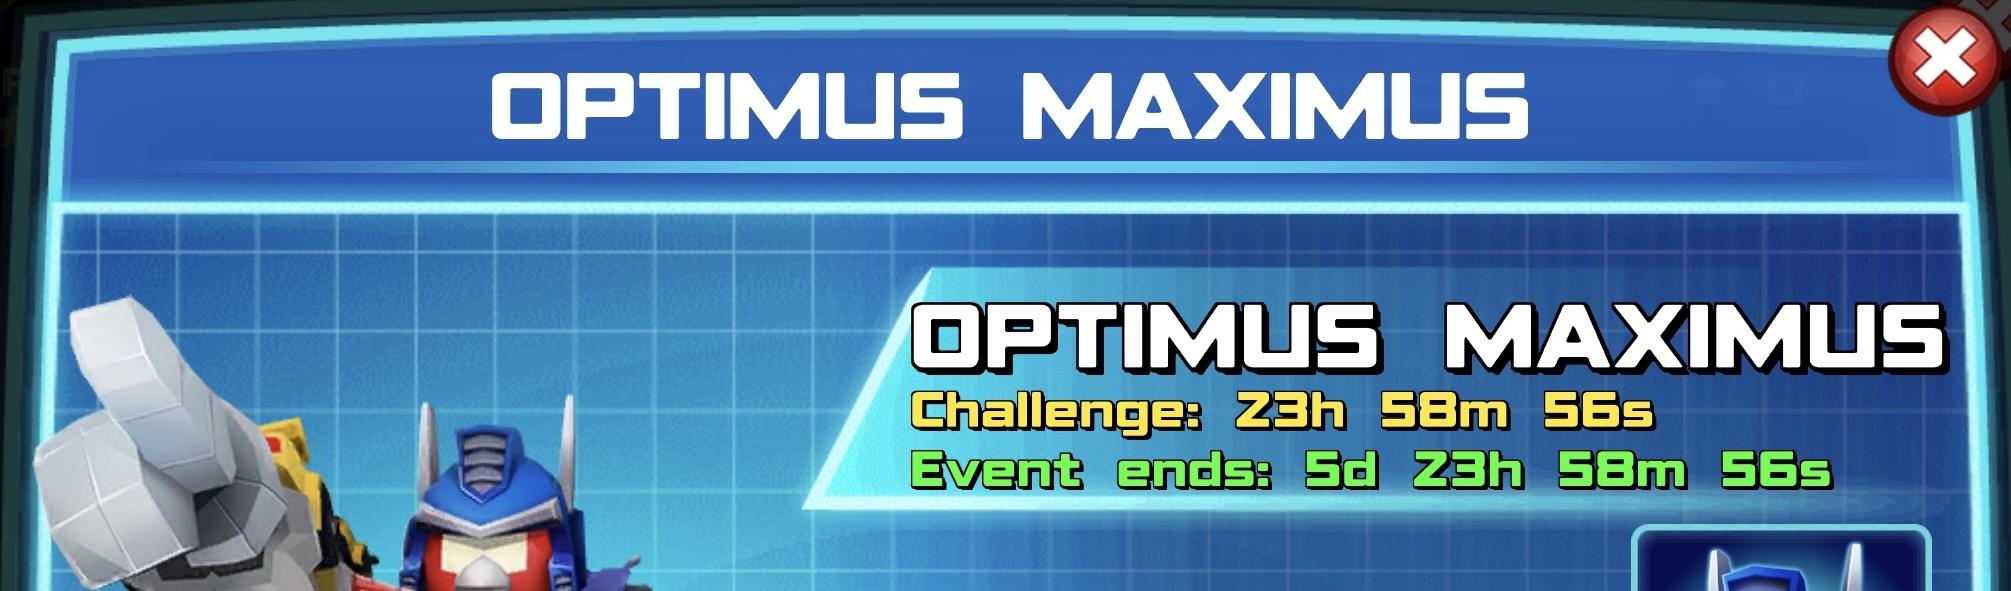 The event banner for Optimus Maximus